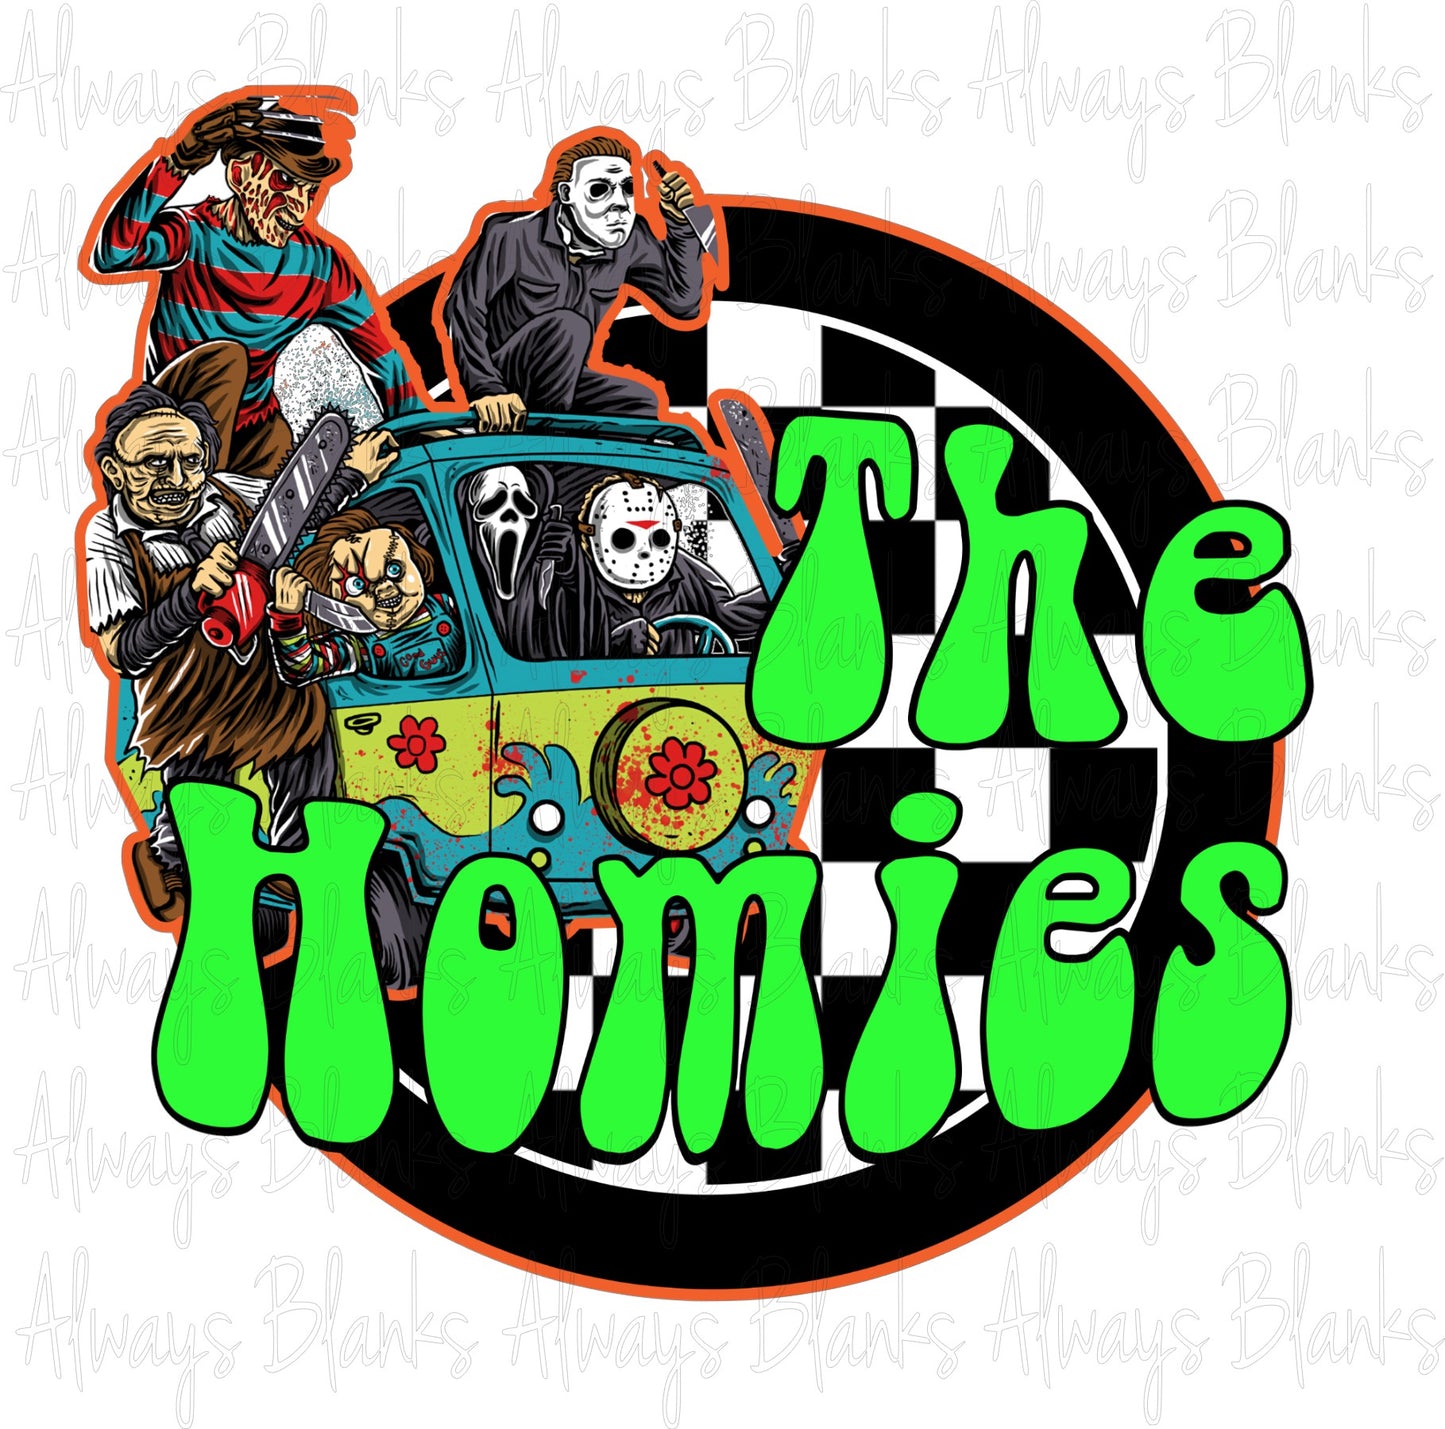 The Homies